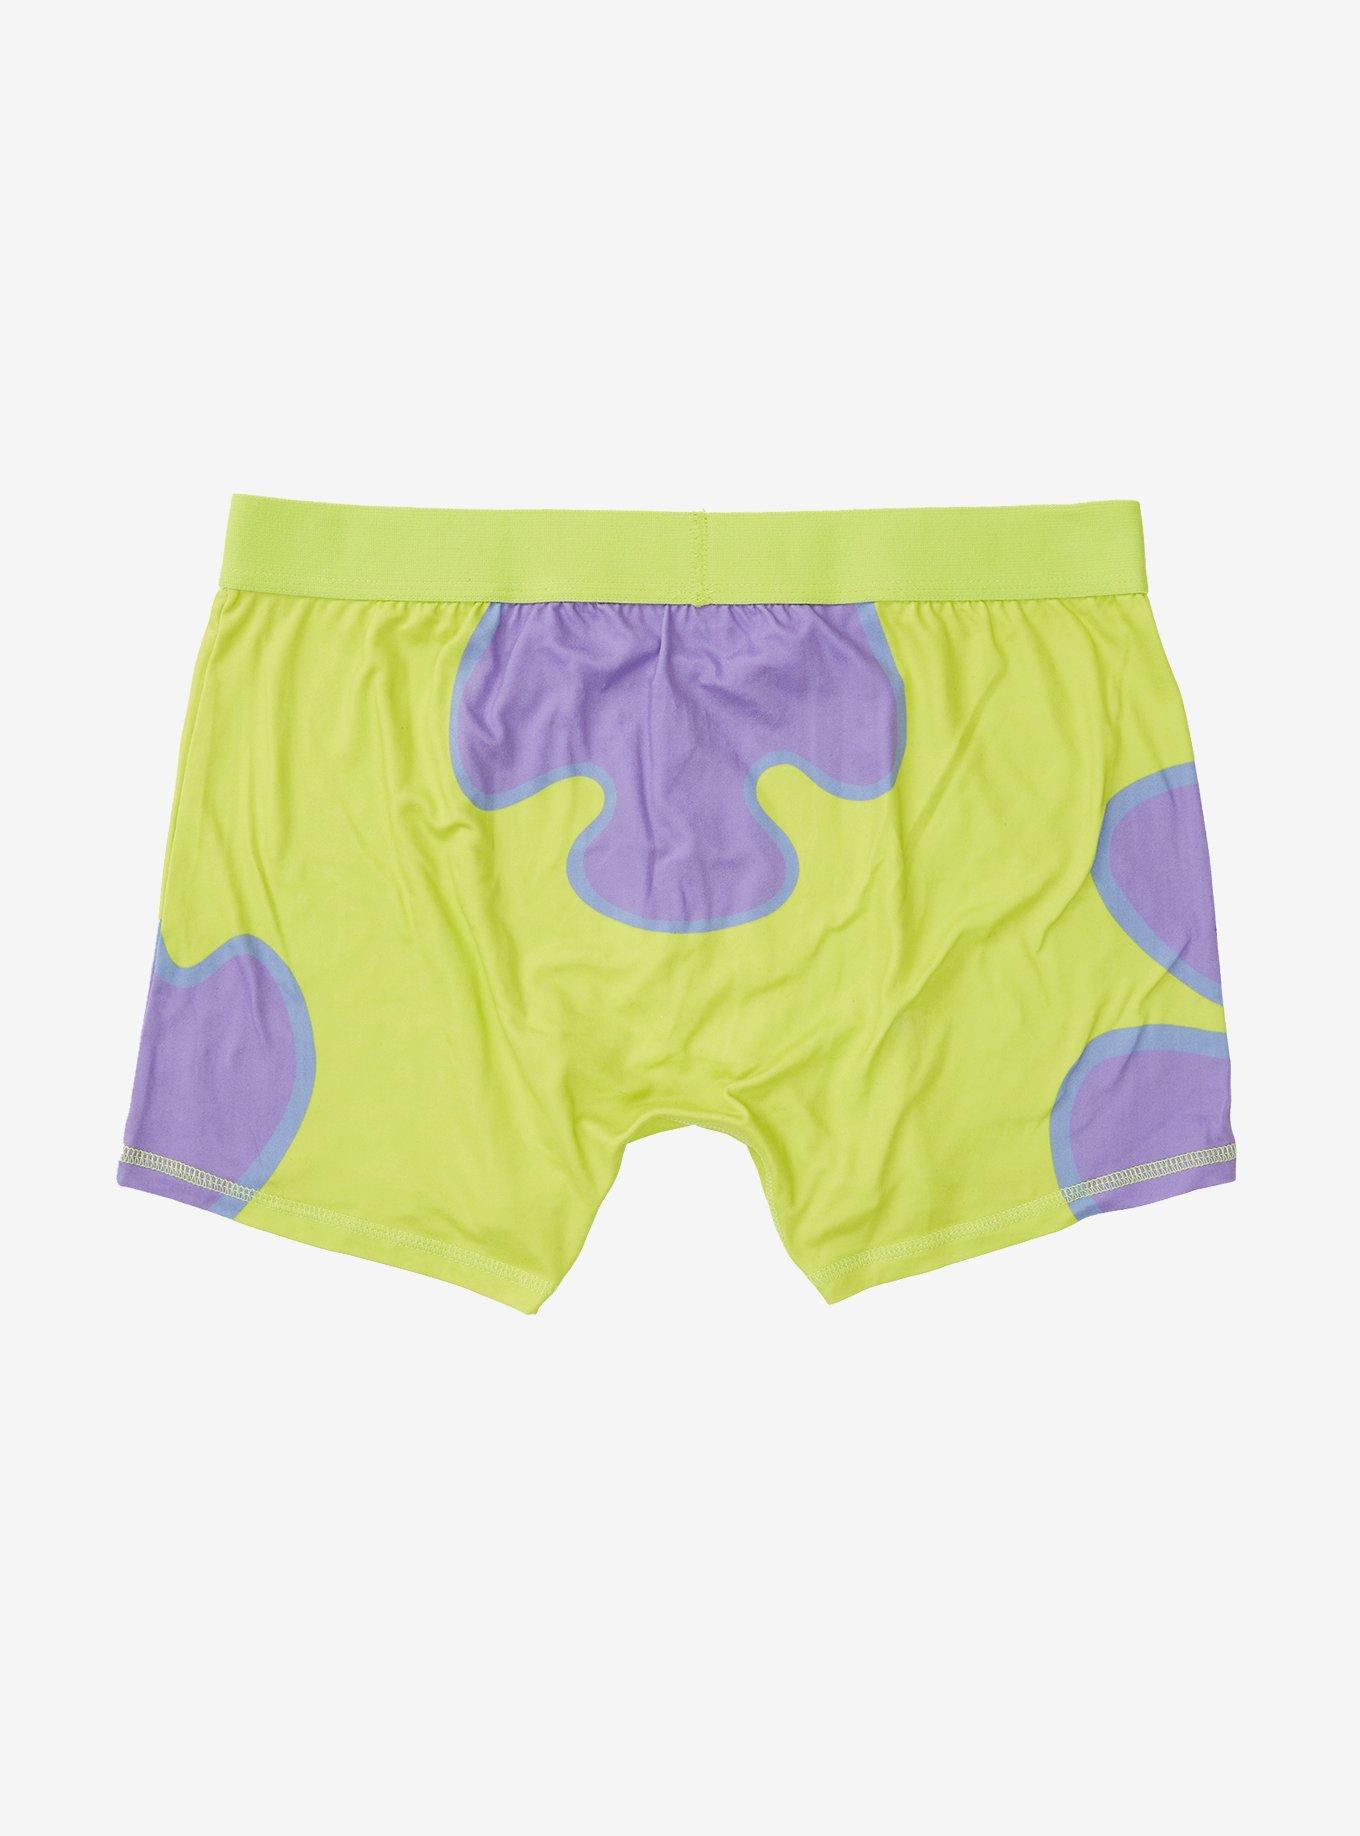 SpongeBob Patrick Star Men Panties Cartoon Underwear Boxershorts Funny  Breathbale Comfortable Underpants 3D Cotton Underwear